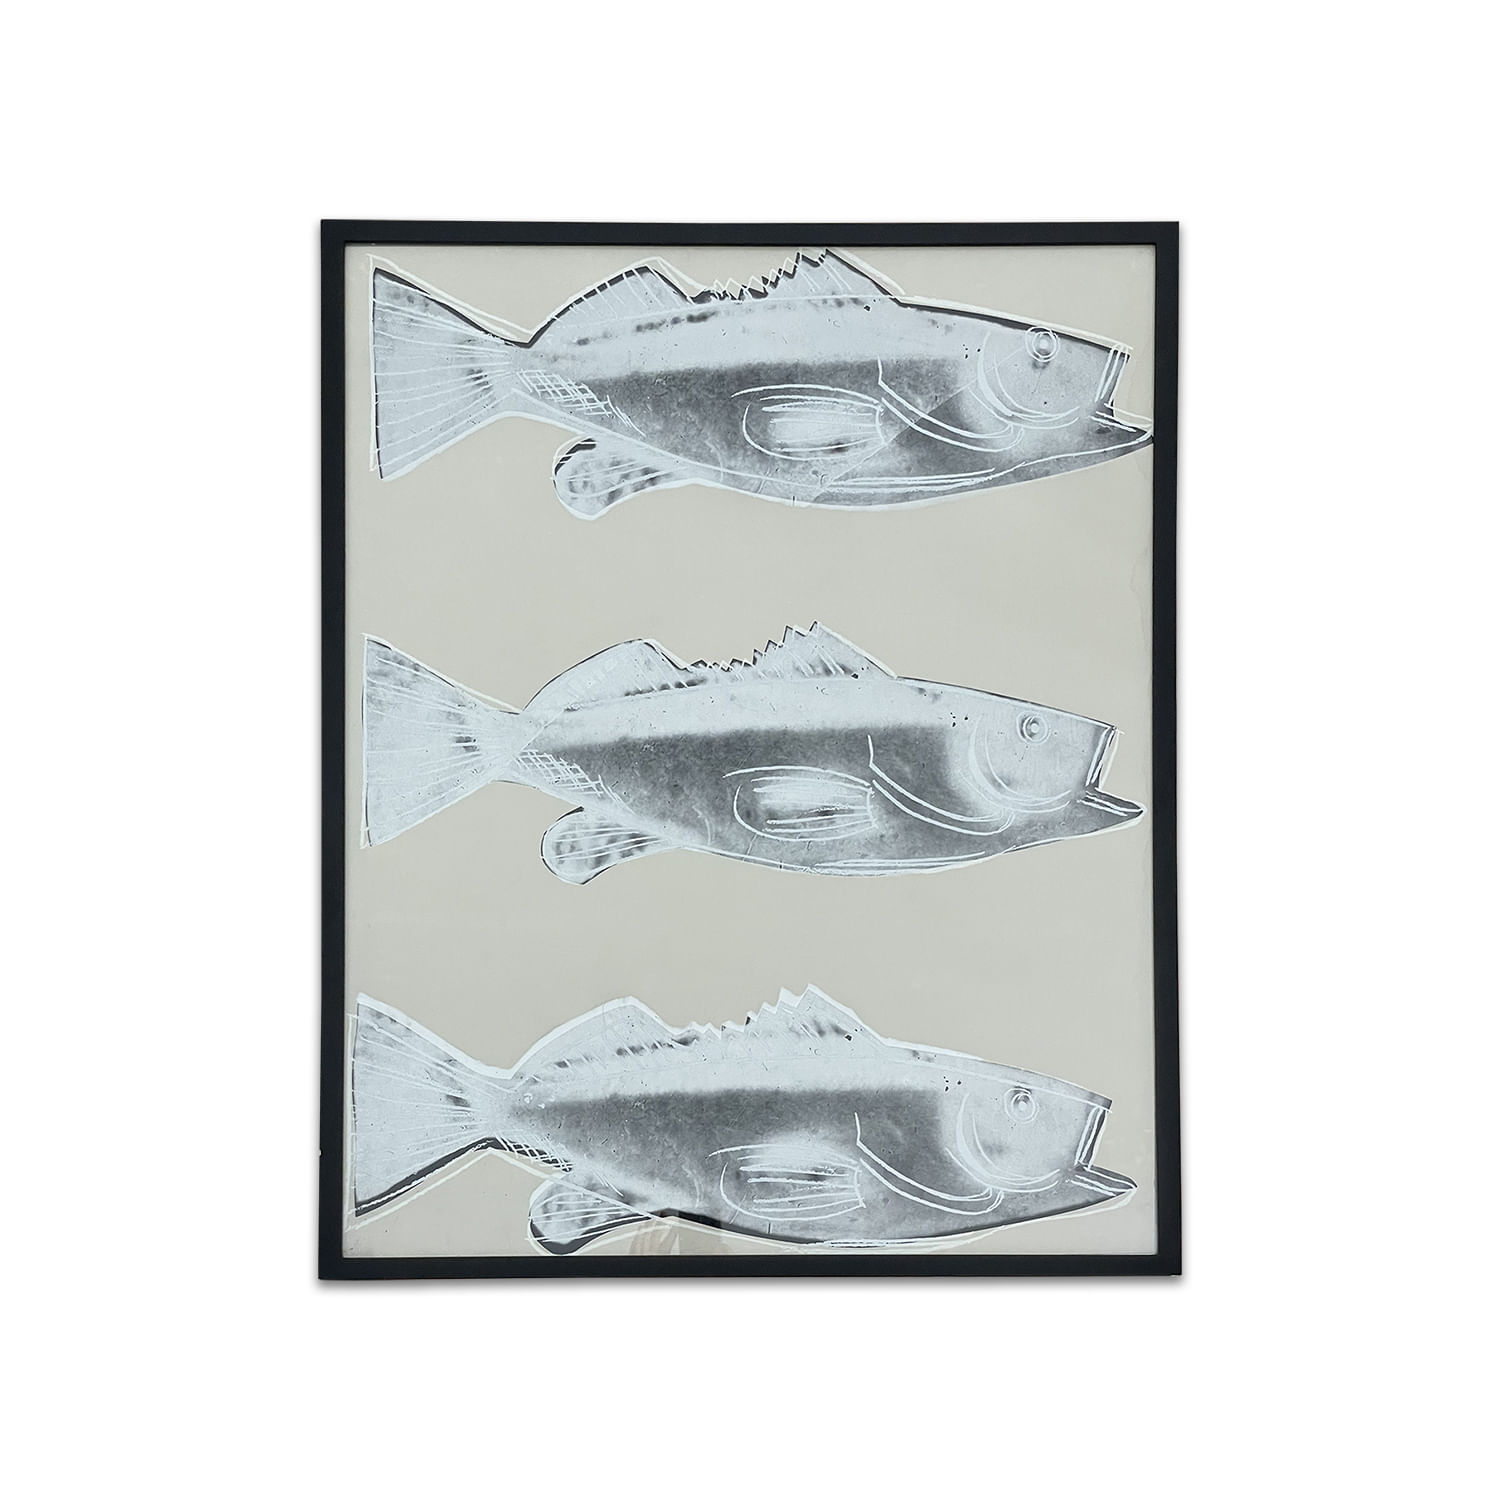 Andy Warhol, Screenprint Fish